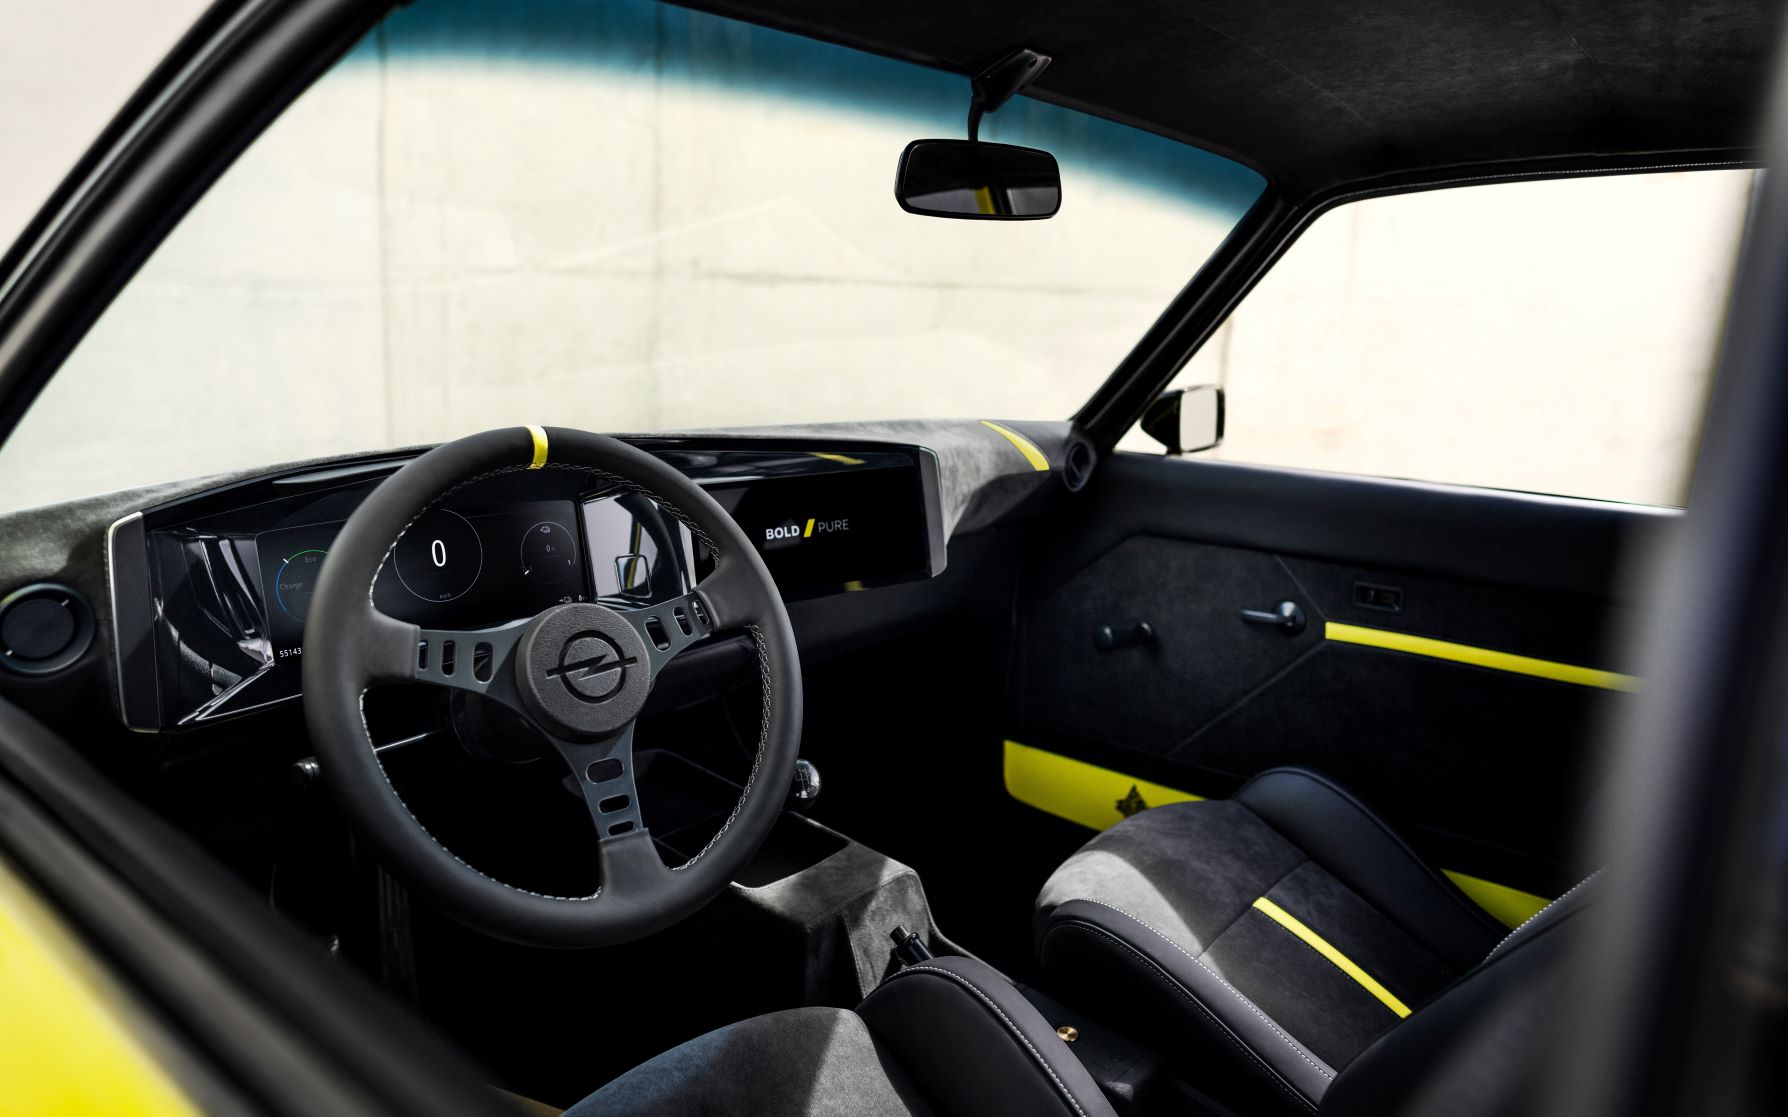 Interior of the Opel Manta